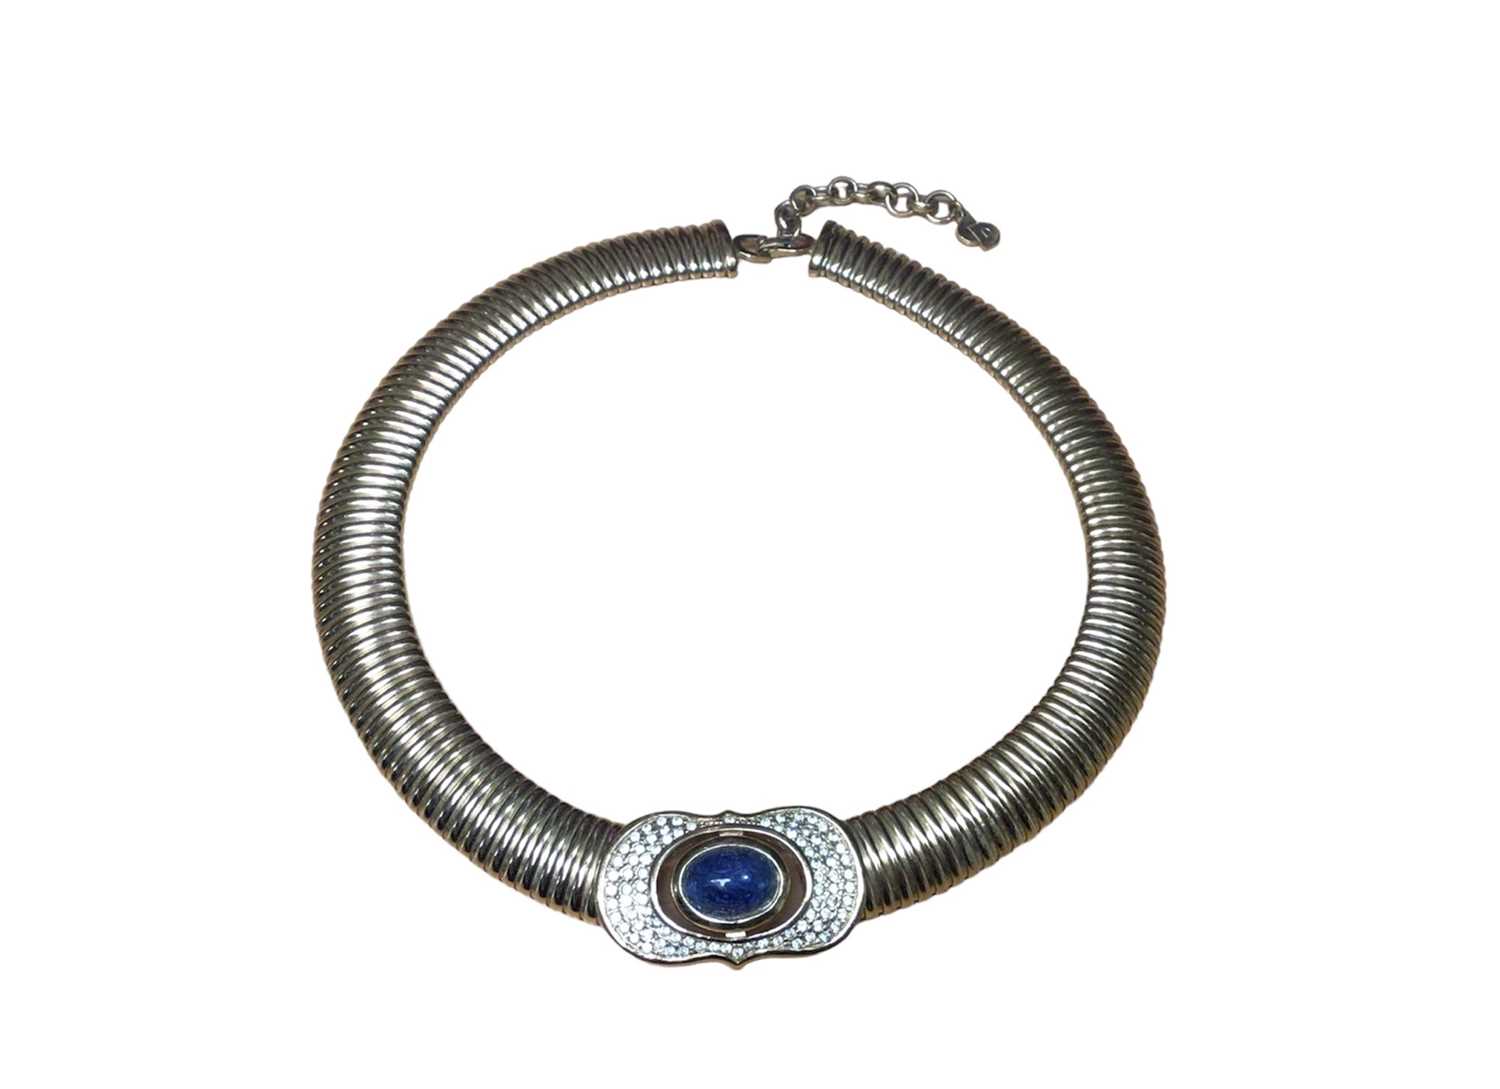 Lot 30 - Christian Dior vintage gilt metal necklace with a paste set plaque and central blue cabochon